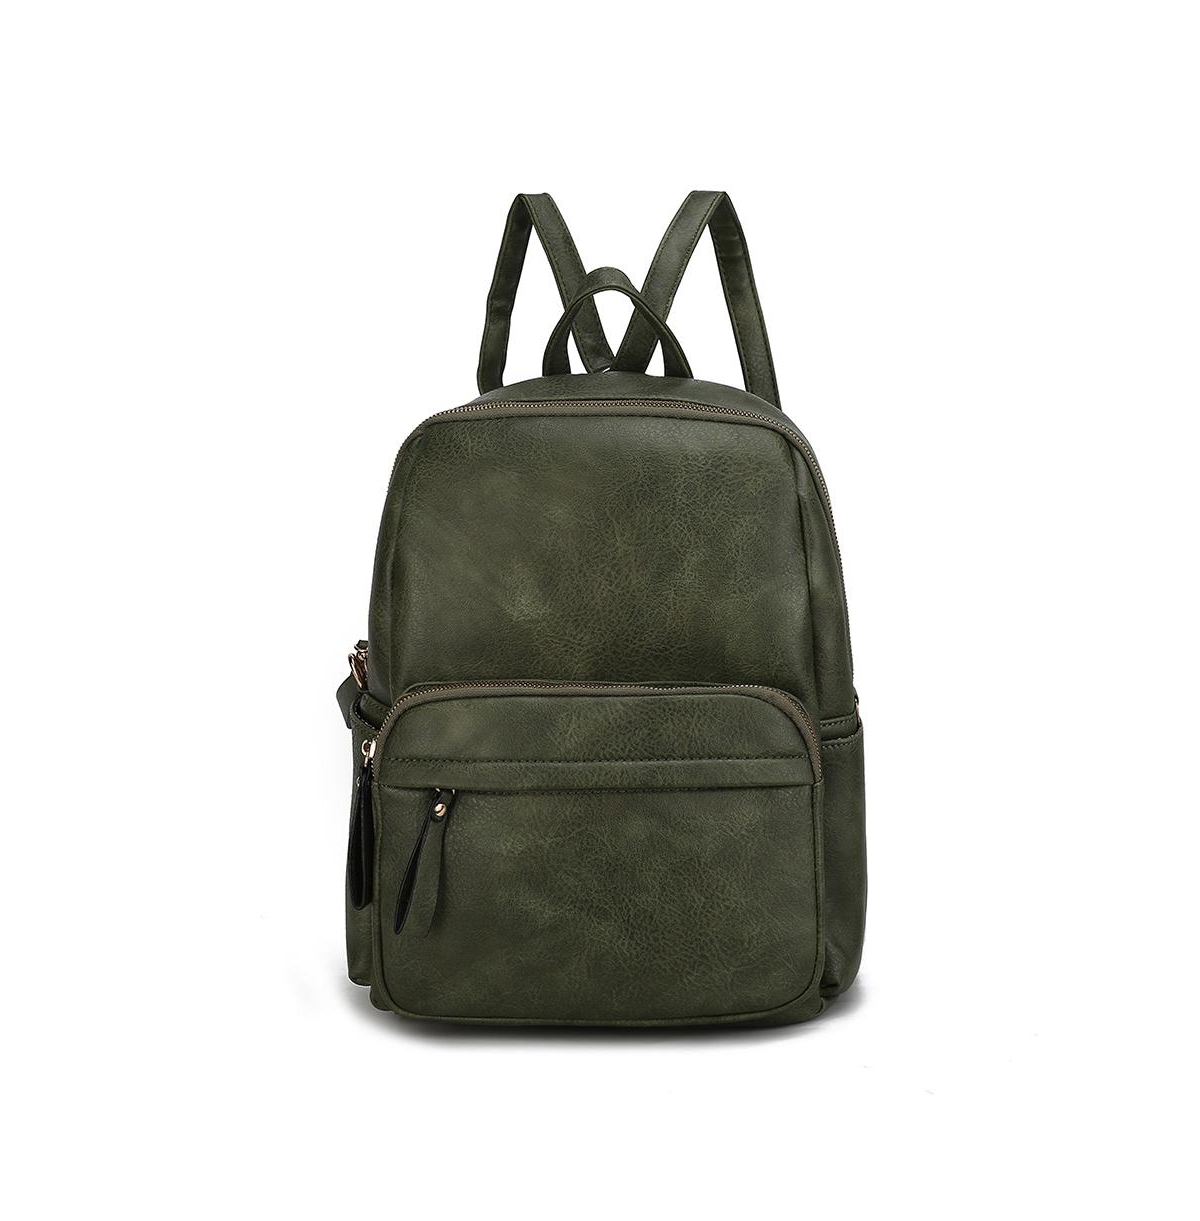 Yolane Backpack Convertible Cross body Bag by Mia k - Burgundy